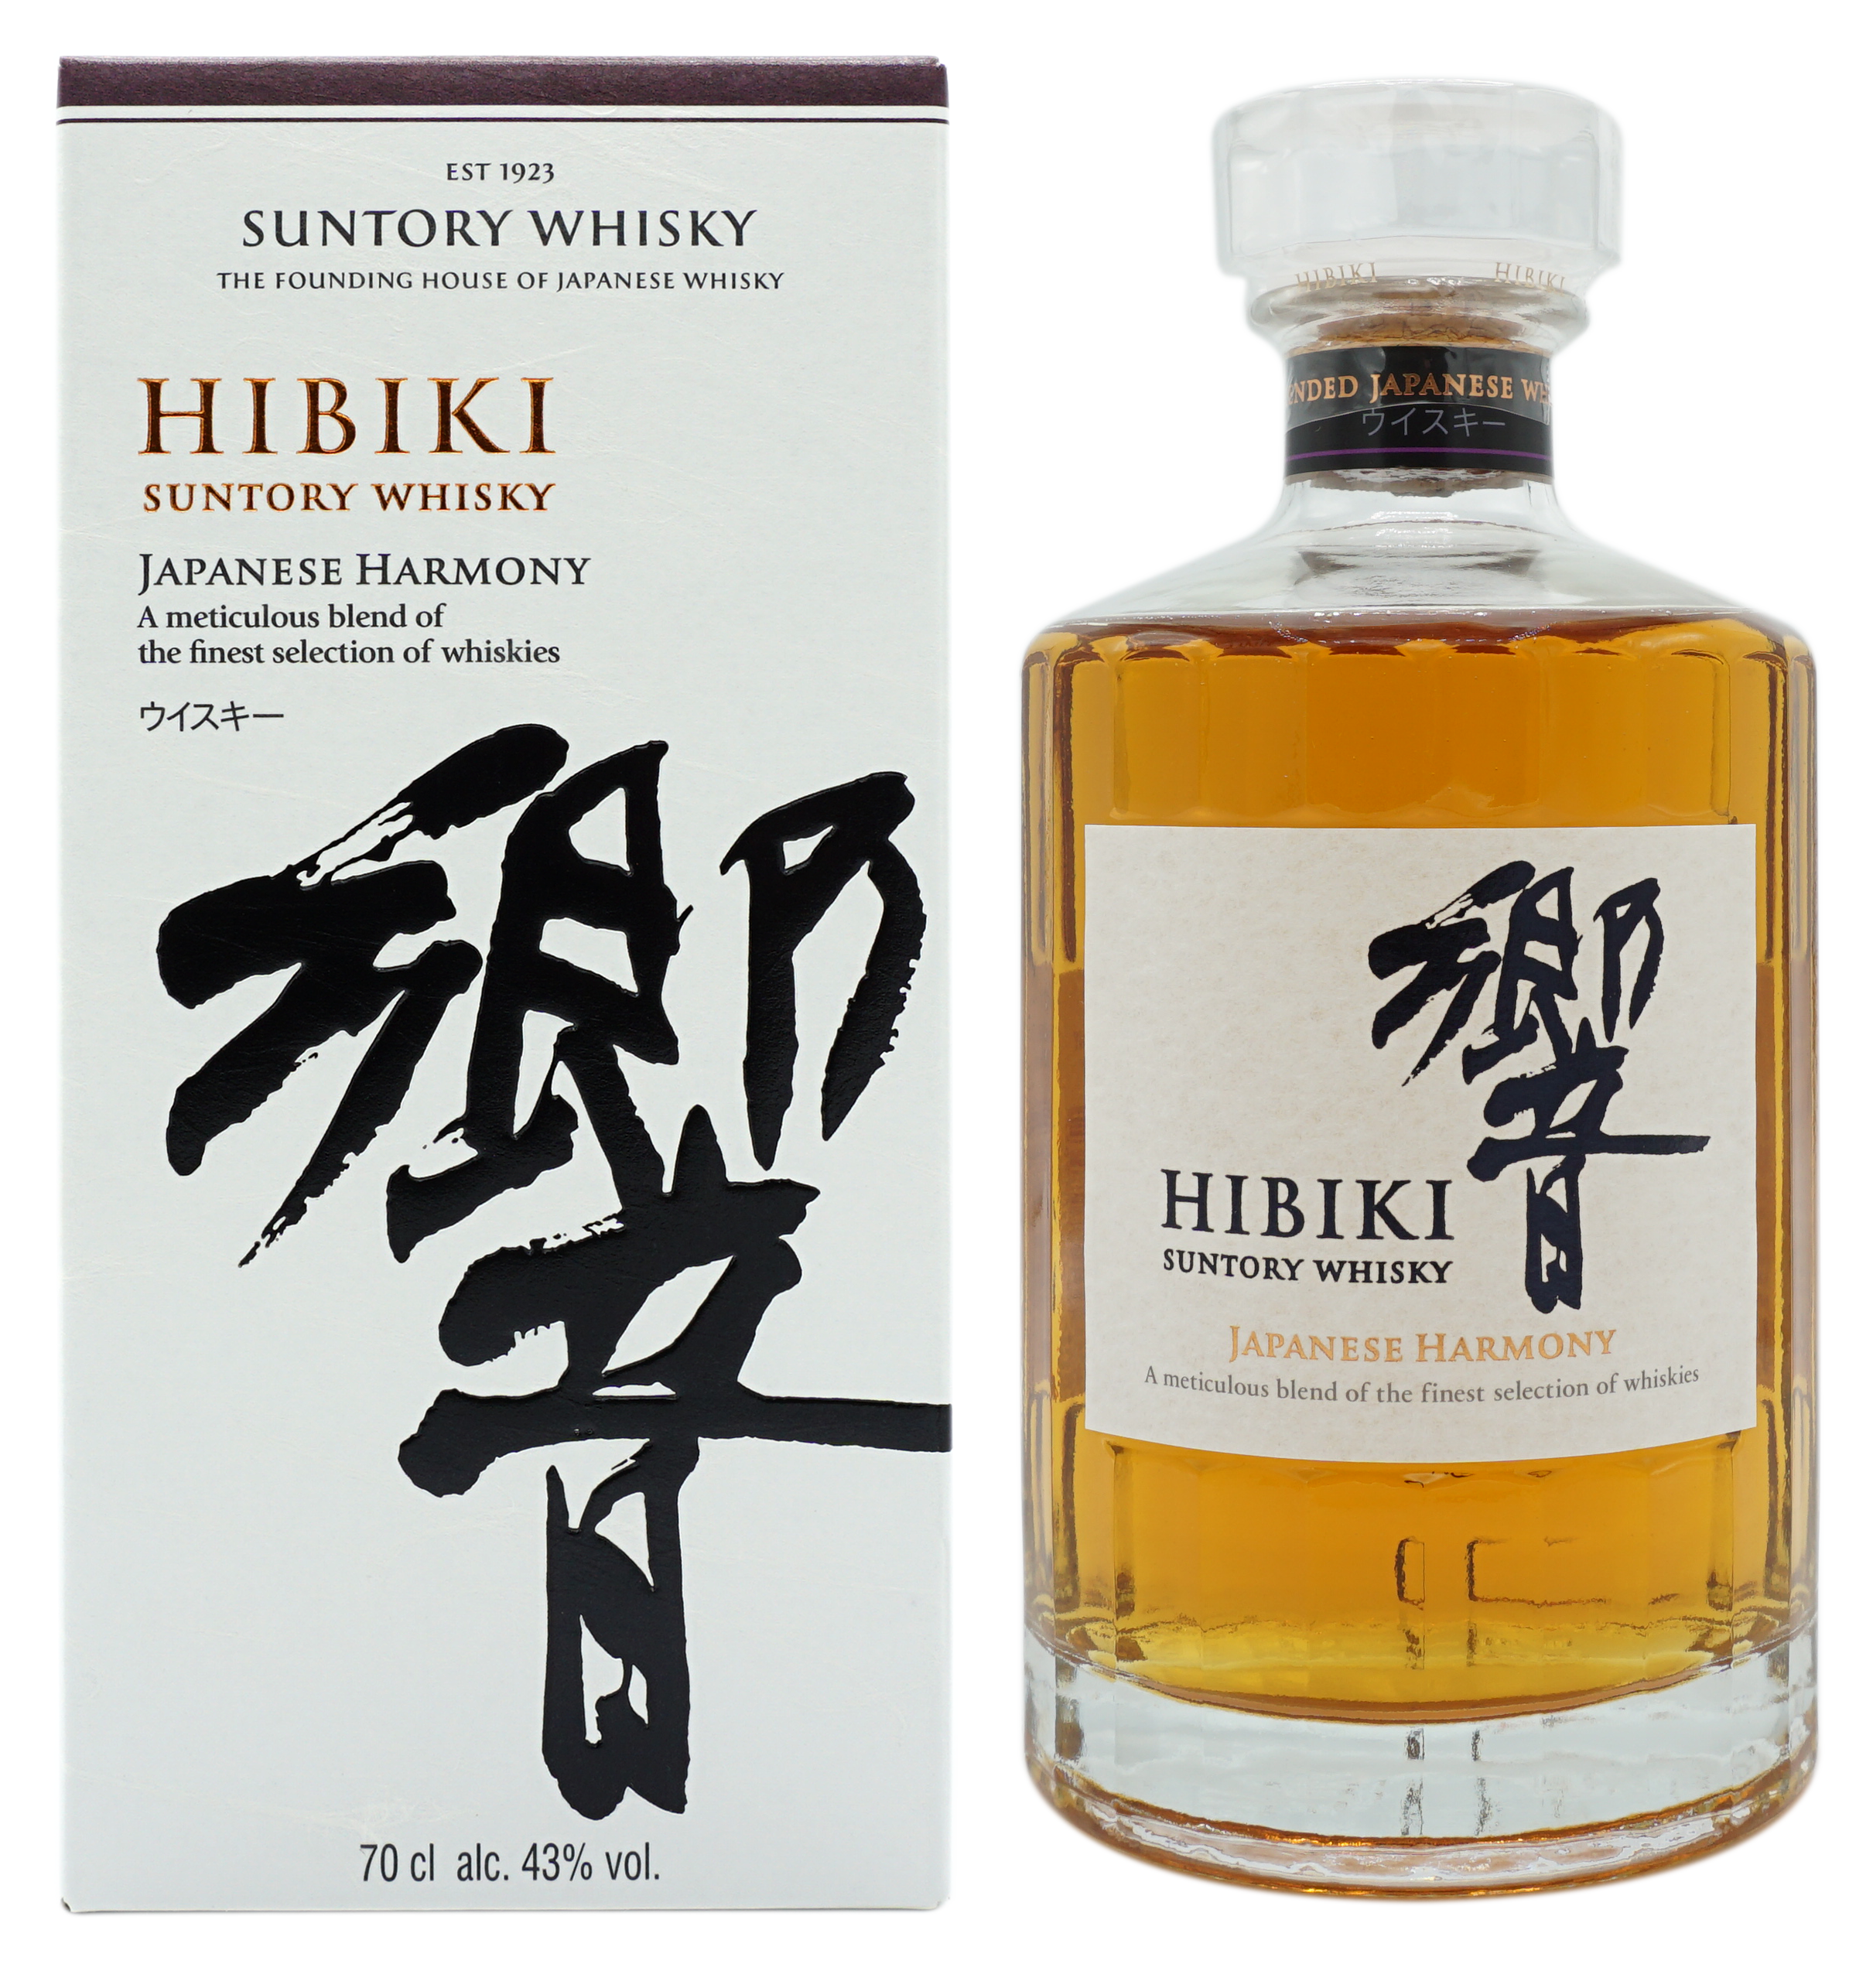 Suntory Hibiki JapaneseHarmony 43% Compleet